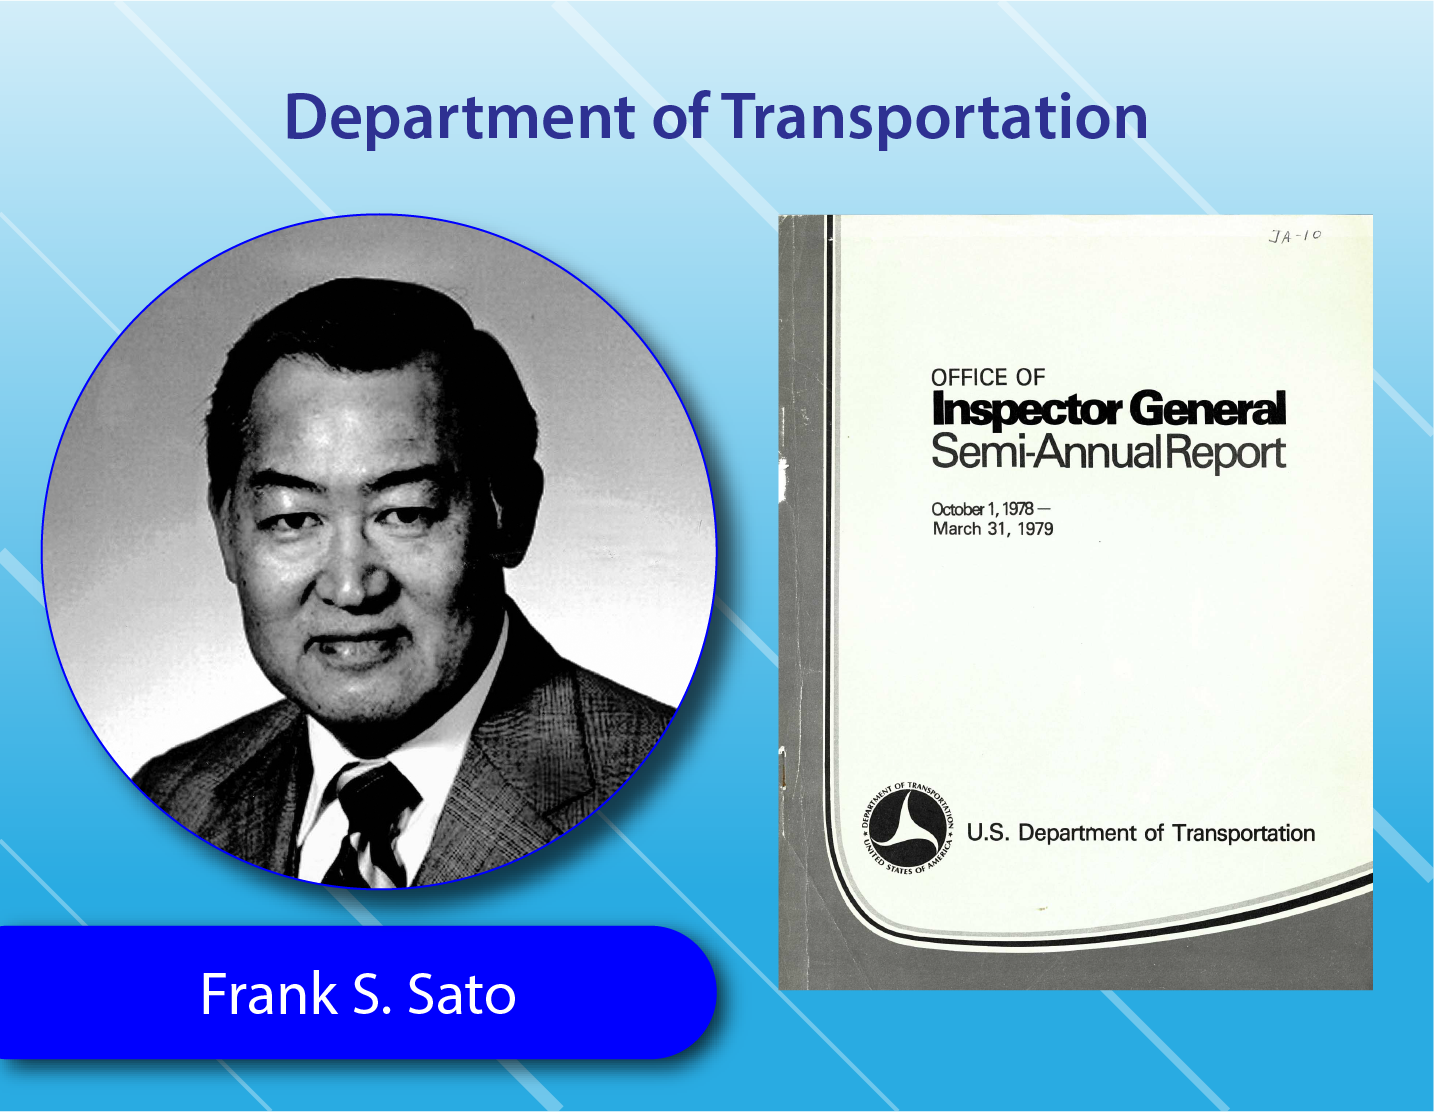 Department of Transportation - Frank S. Sato